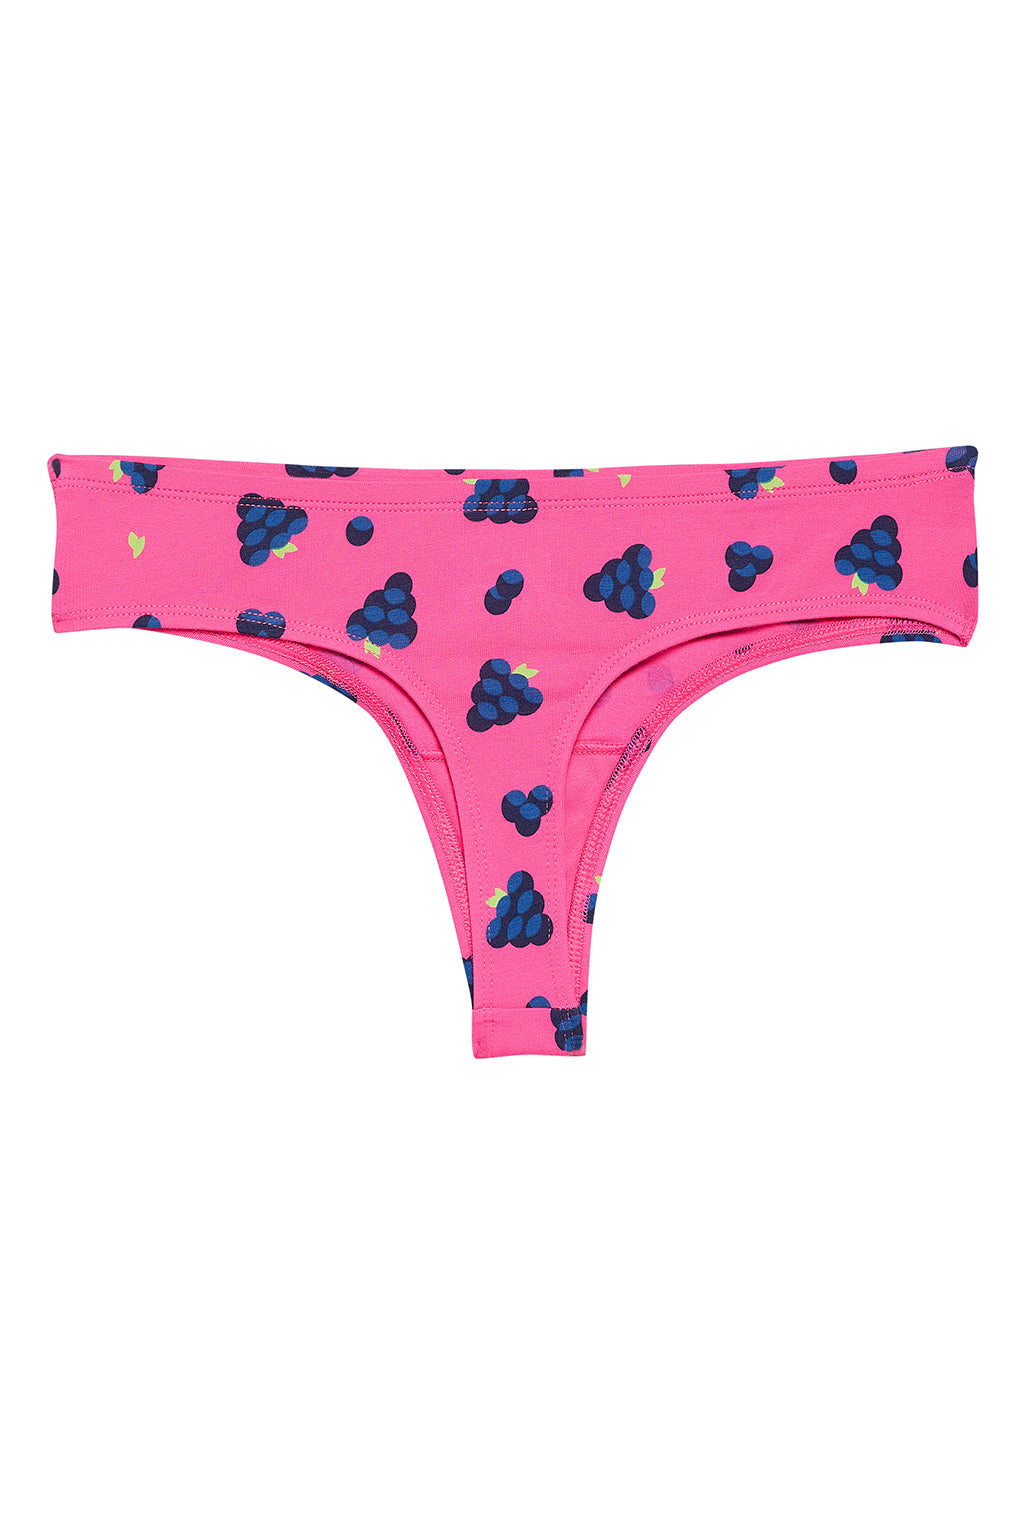 Buy Low Waist Fruit Print Thong in Hot Pink with Inner Elastic